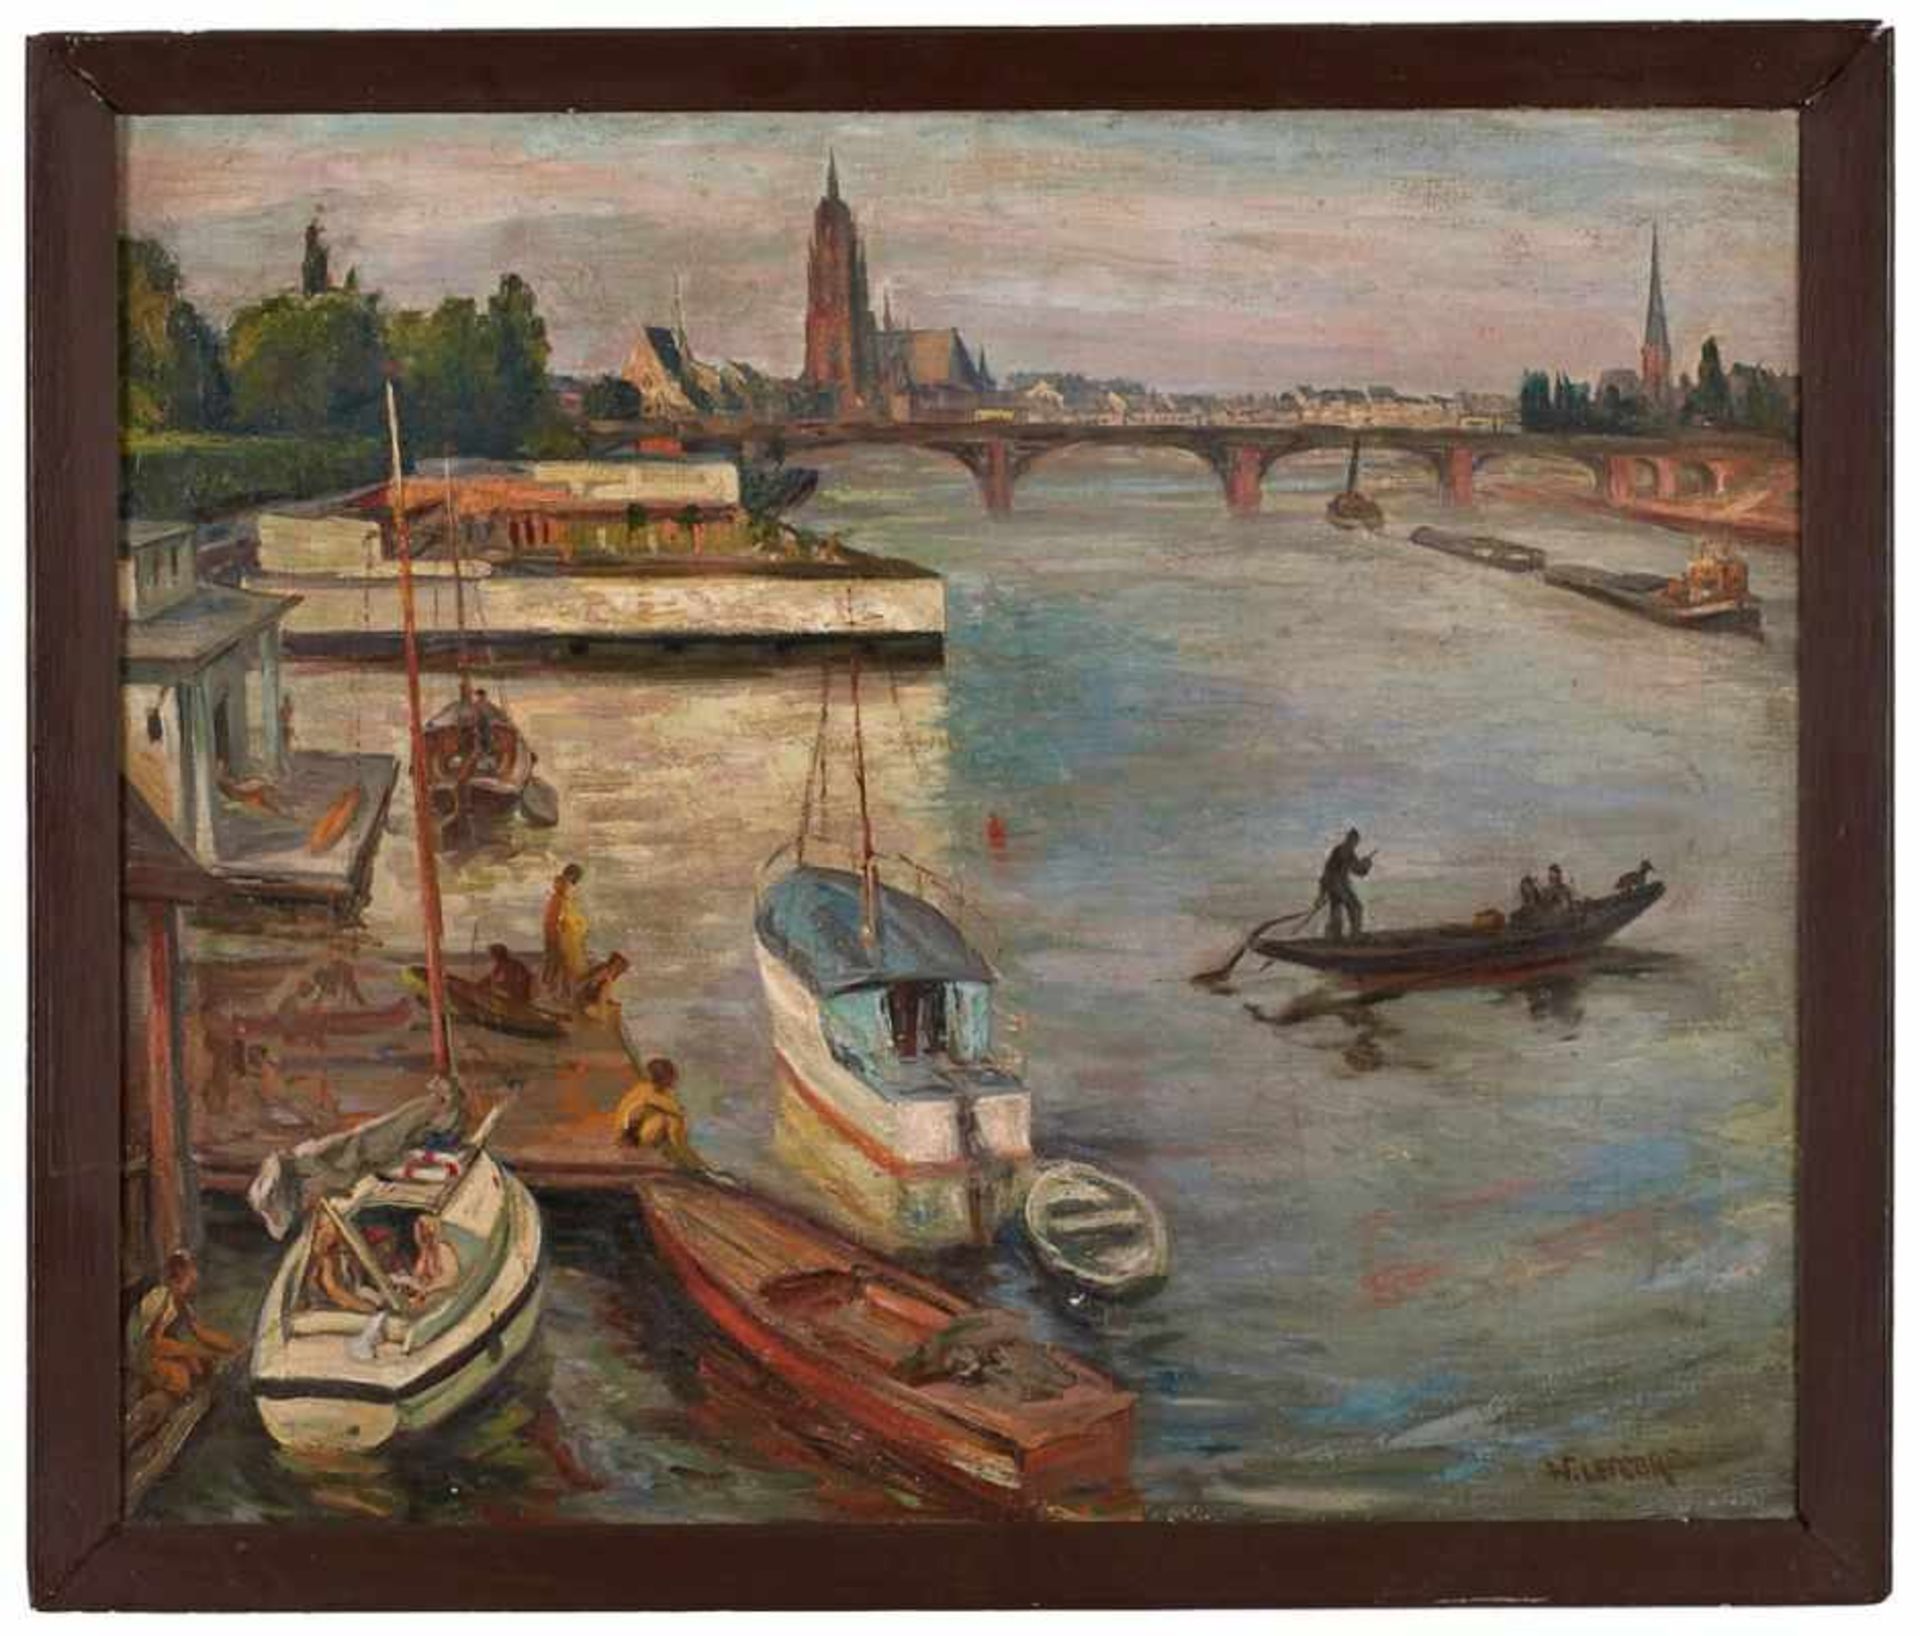 Gemälde Wilhelm Lefèbre 1873 Frankfurt - 1904 Bozen Schüler der Akad. Düsseldorf (1889/95; Lauen-